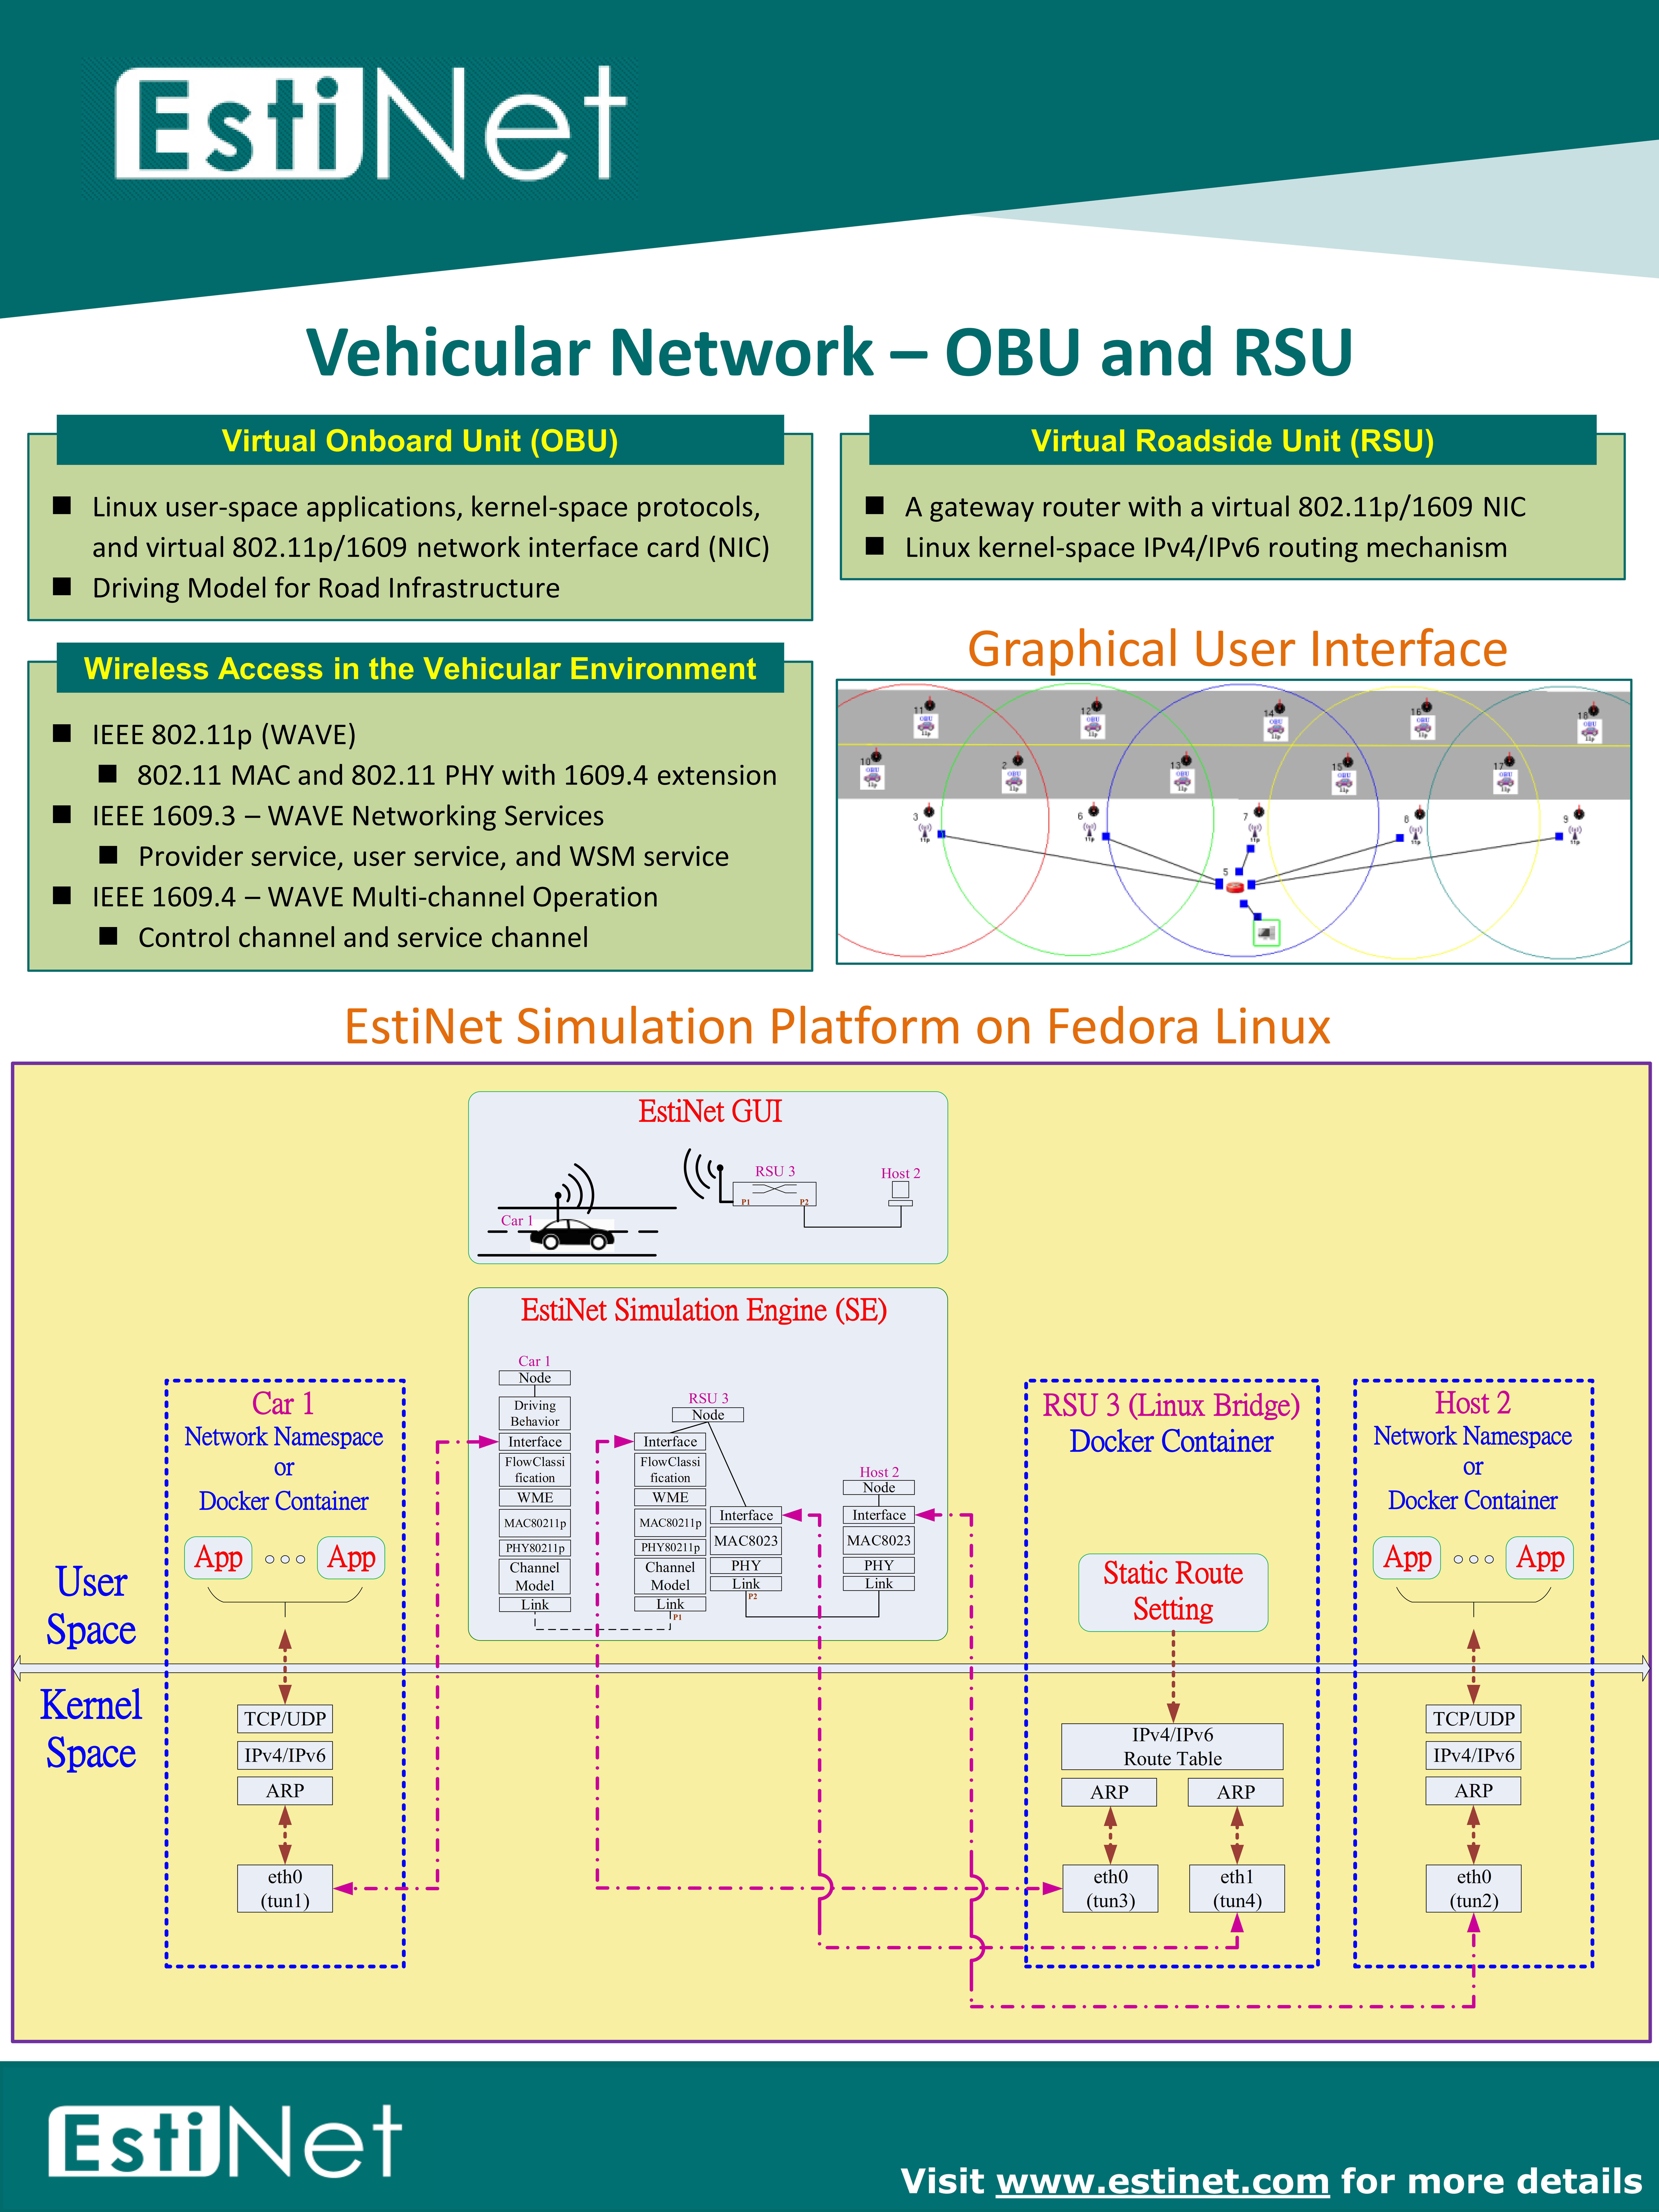 EstiNet_X_Brief__Vehicular_Network_OBU_and_RSU_20170814.00_1